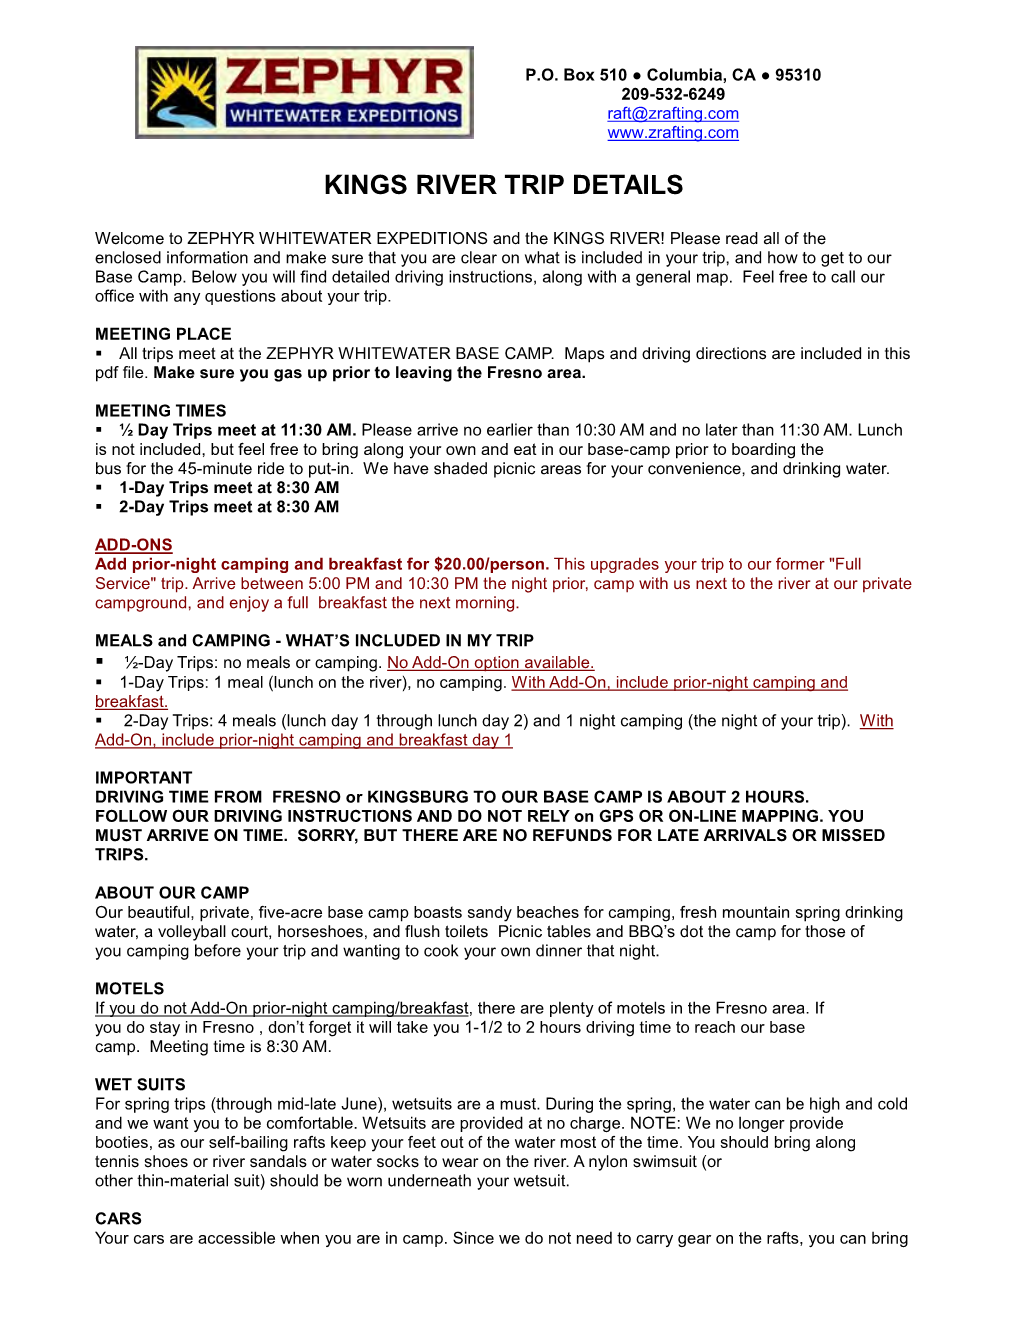 Kings River Trip Details